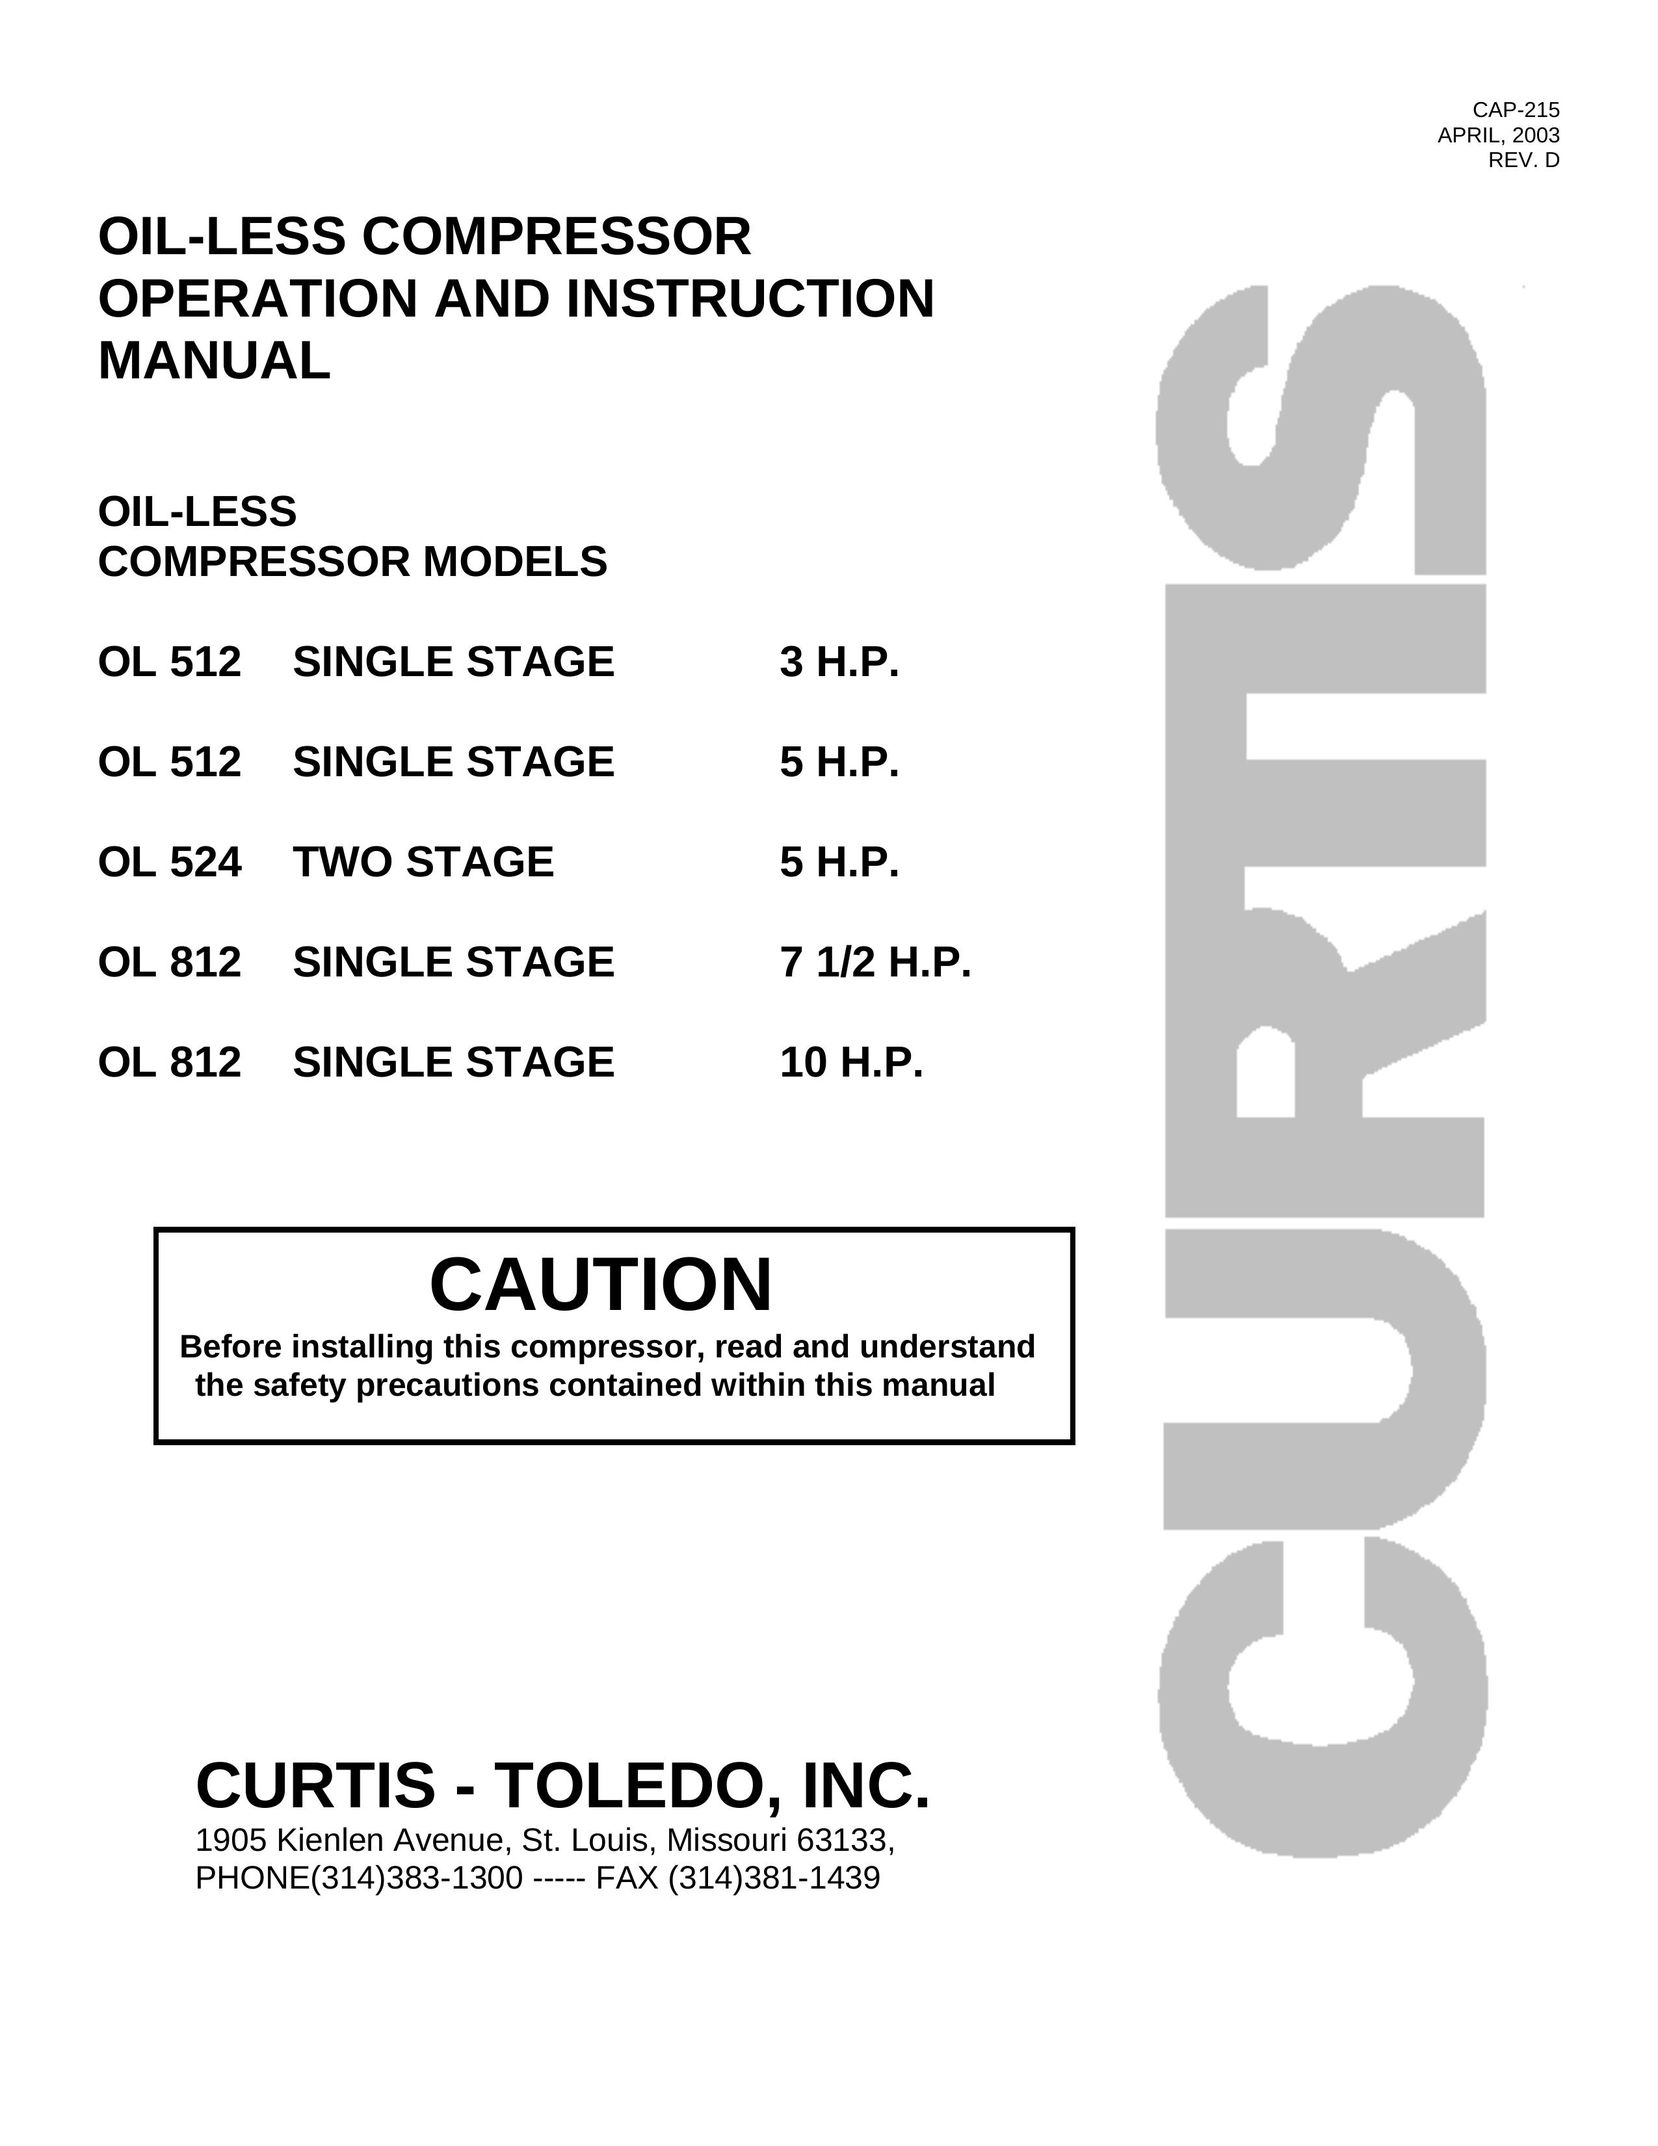 Curtis OL 812 Air Compressor User Manual